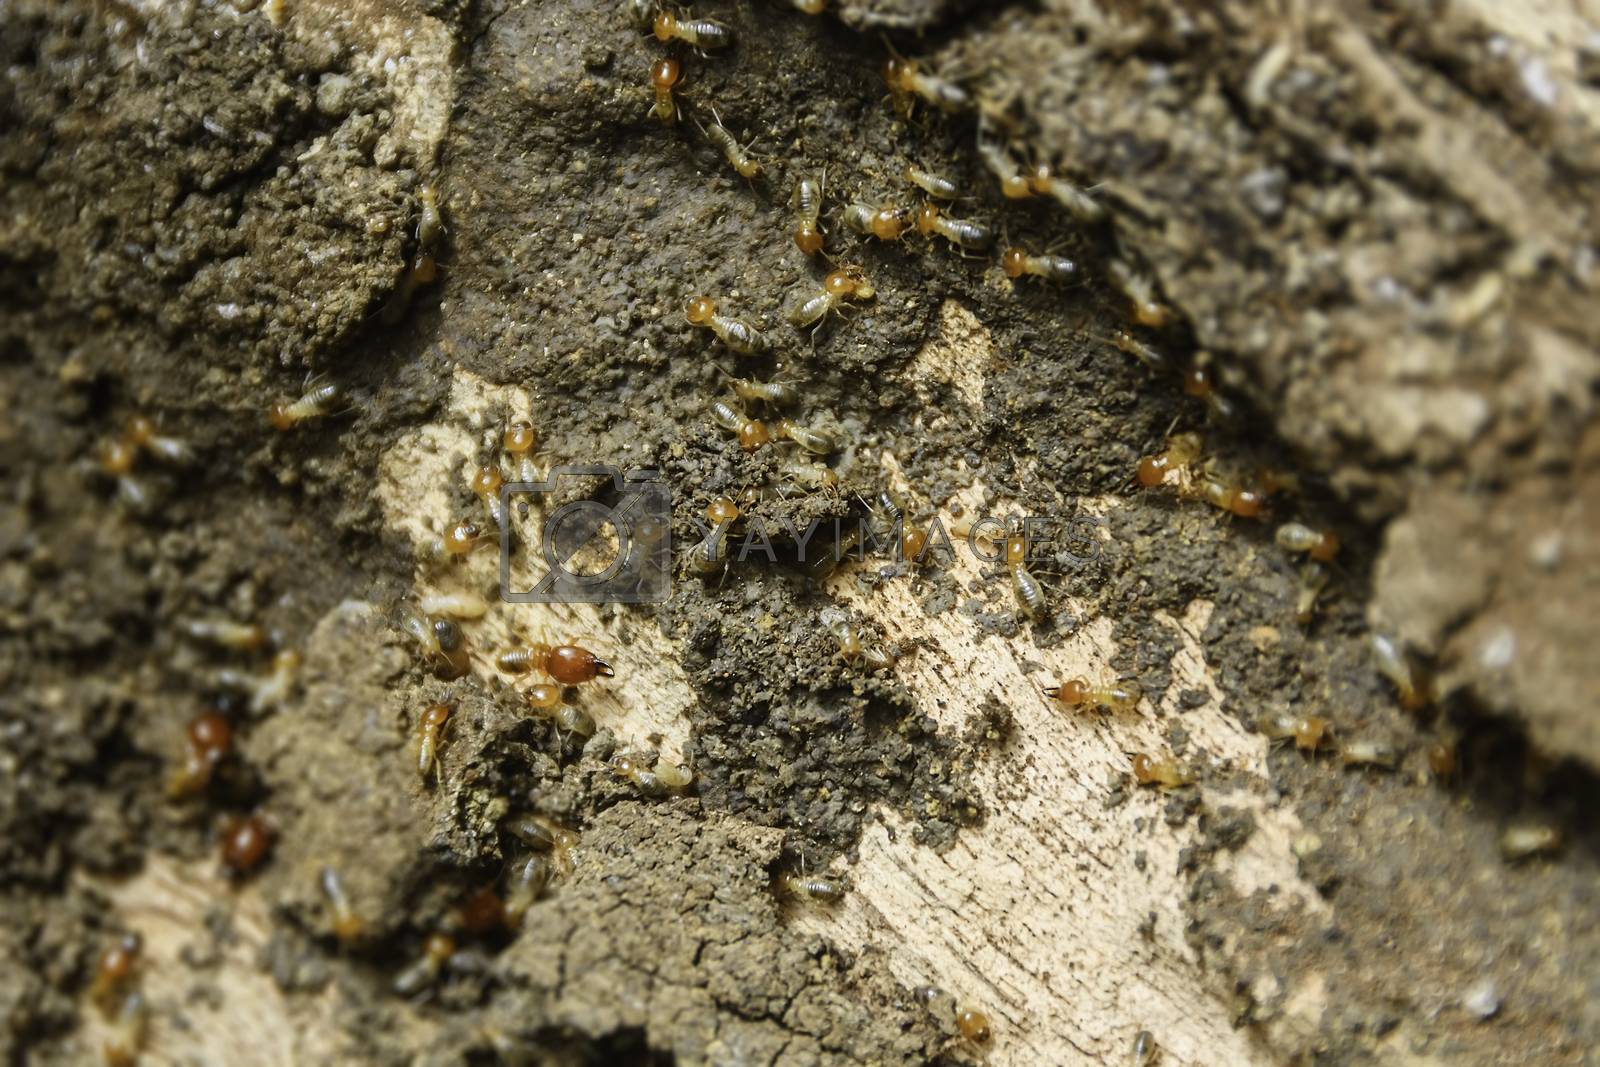 Royalty free image of Termites Colony by tonyoquias